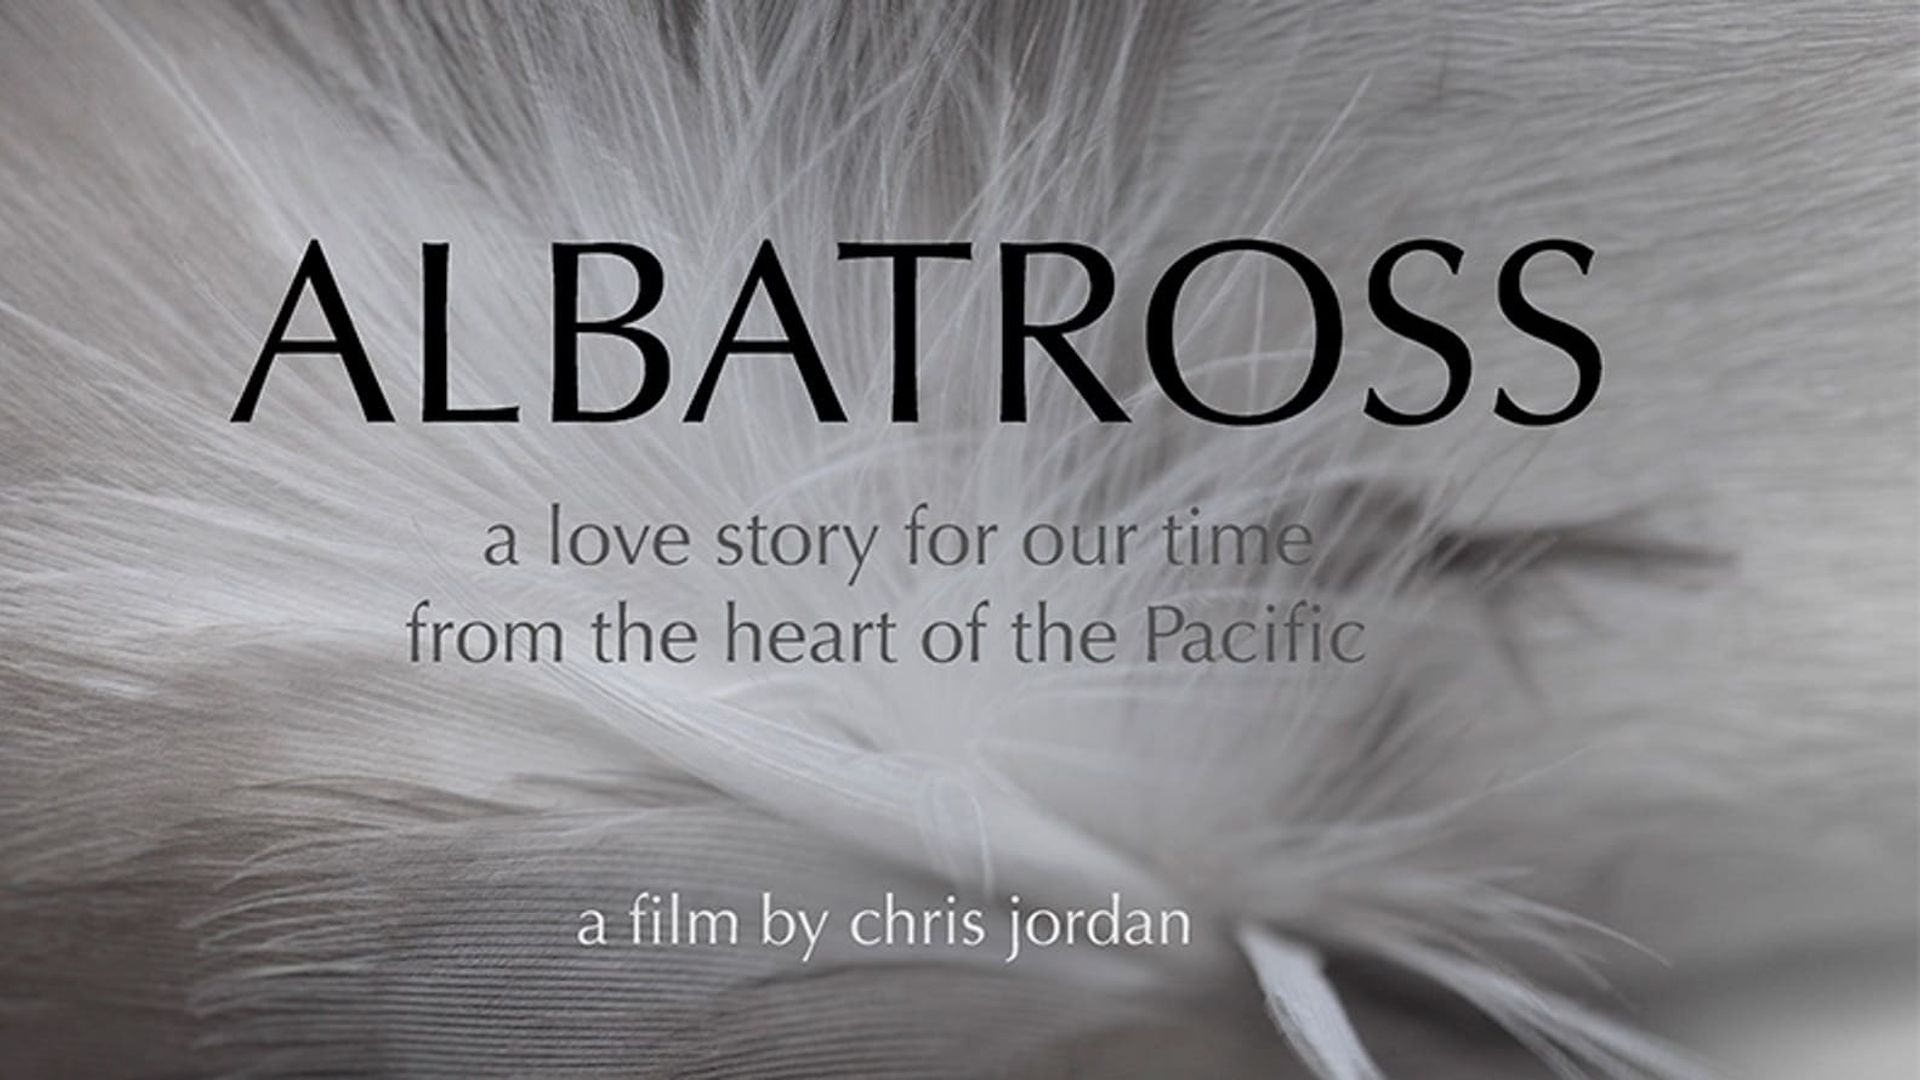 Albatross background